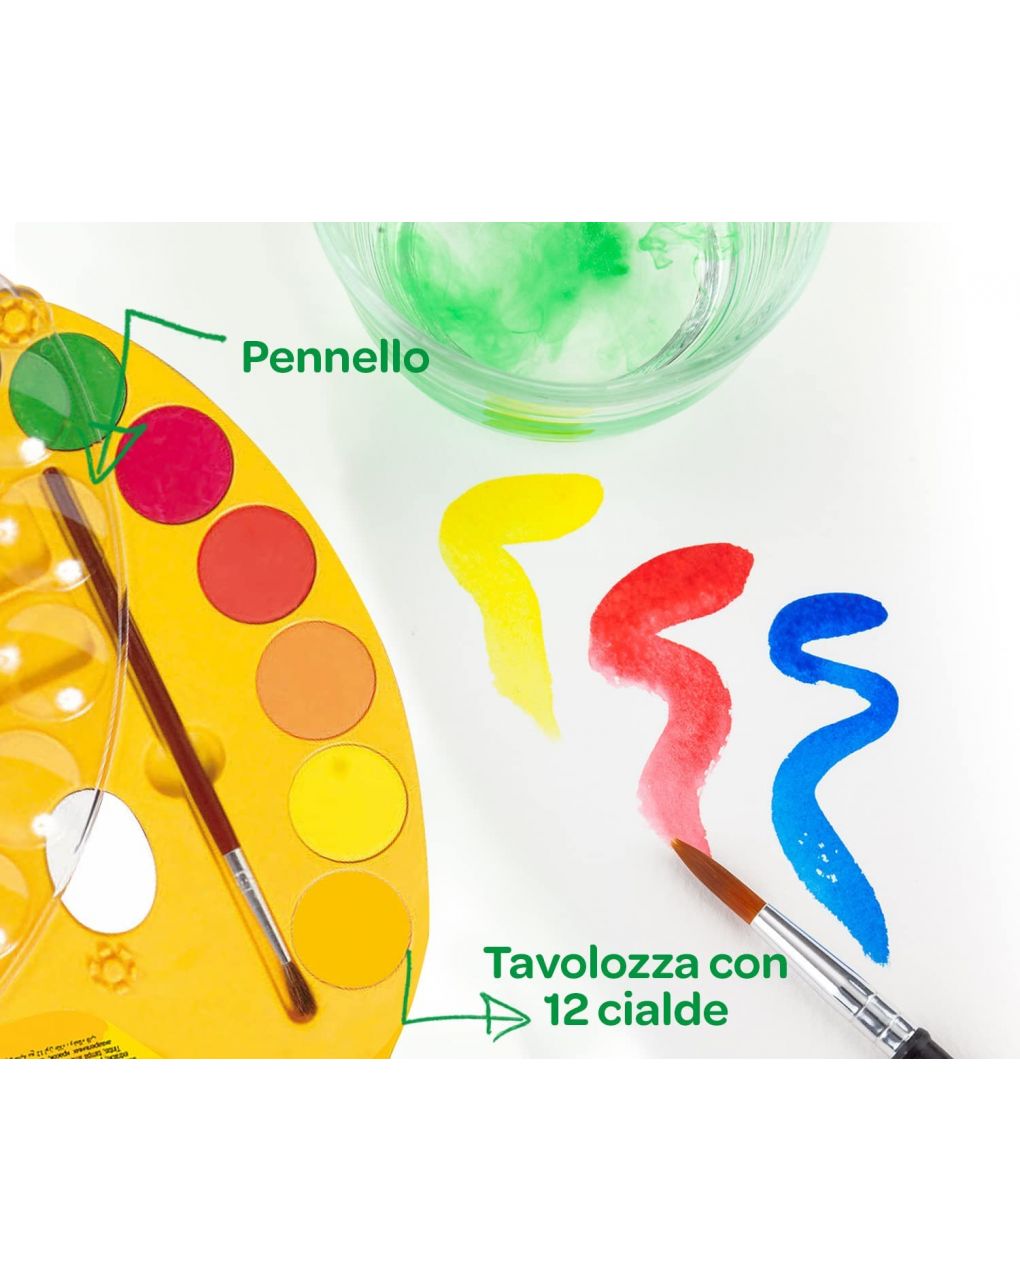 Tavolozza del pittore set con 12 aquerelli e pennello - crayola - Crayola